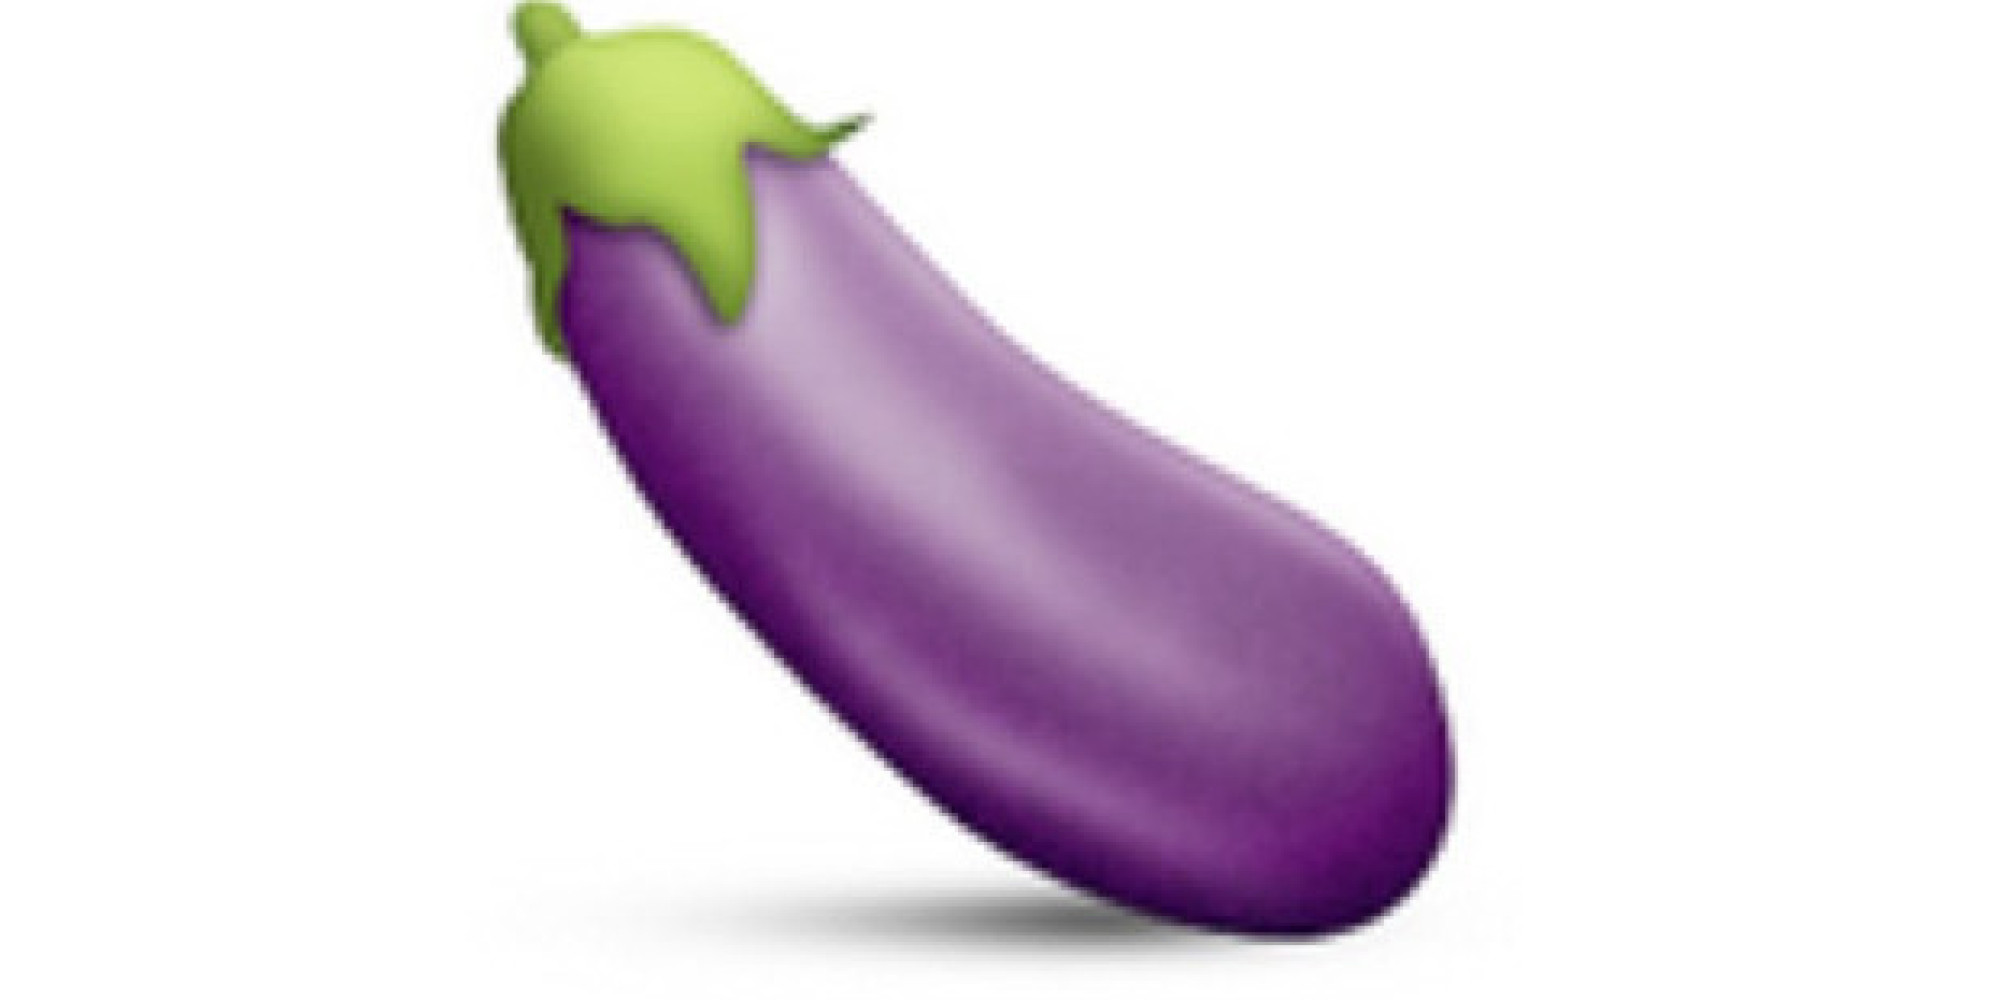 20 Best Ideas Veiny Eggplant Emoji - Best Round Up Recipe Collections